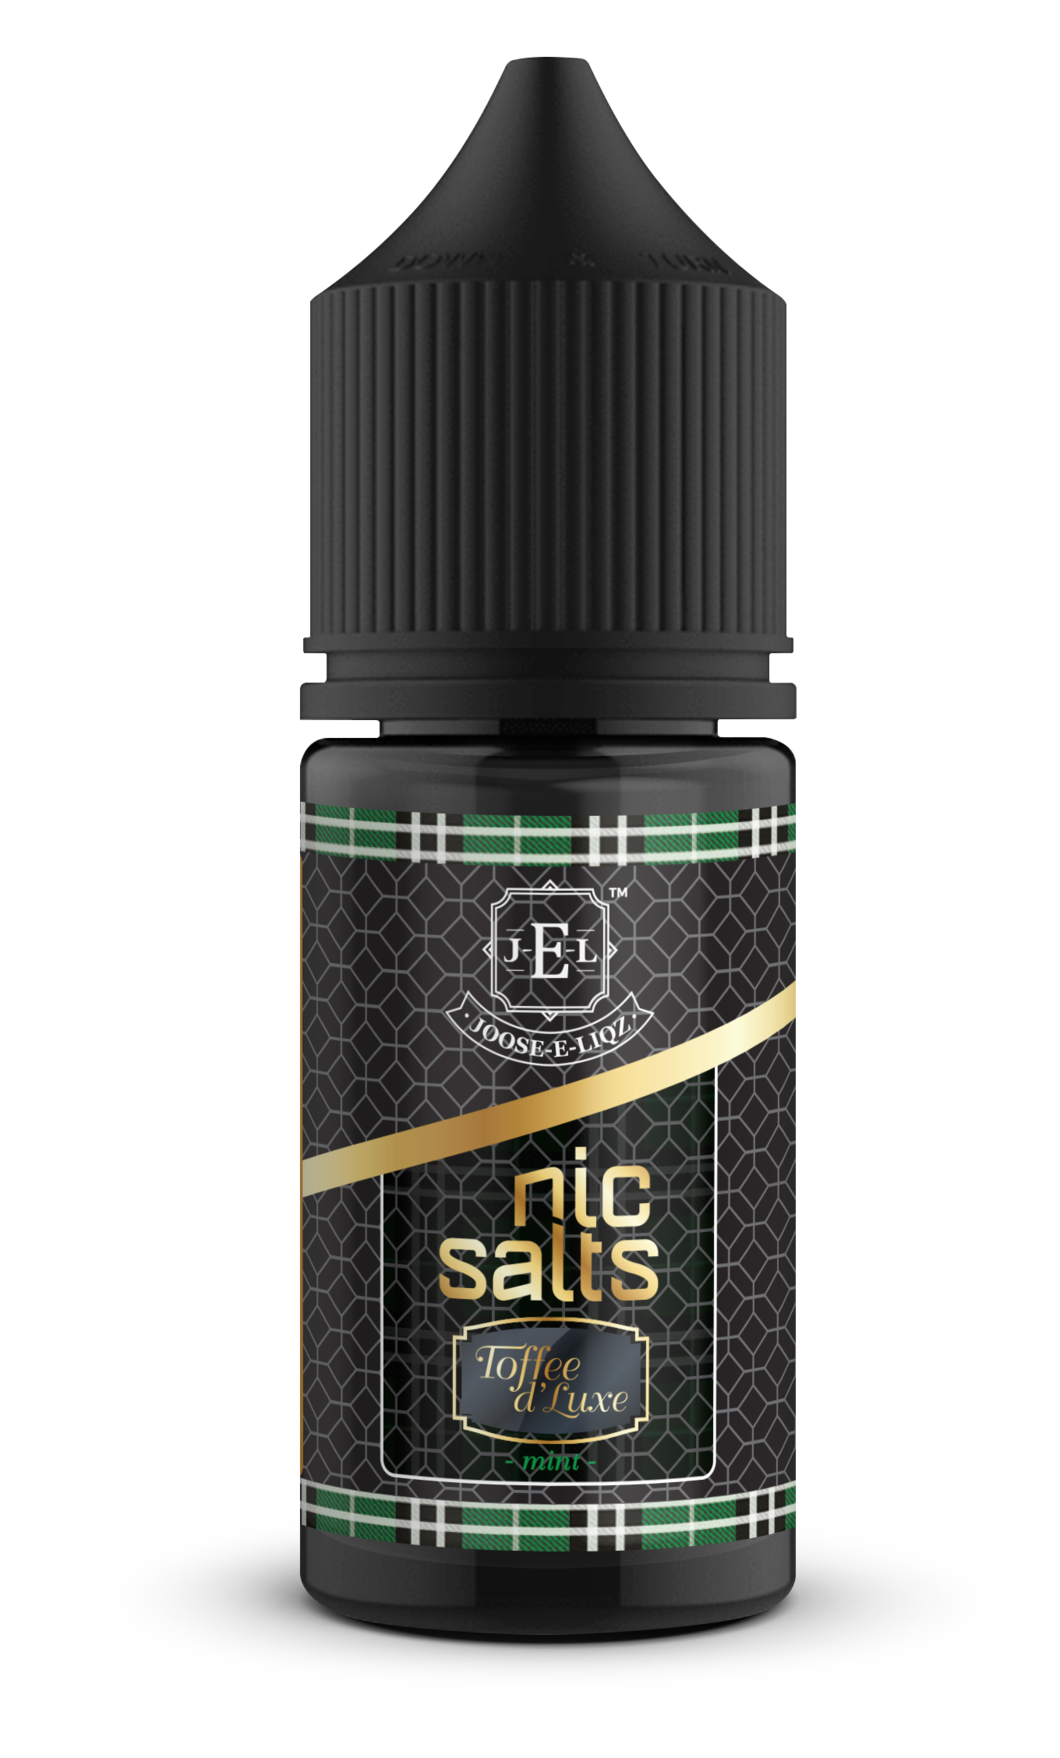 JEL Toffee D'Luxe Mint Nic Salts 30ml